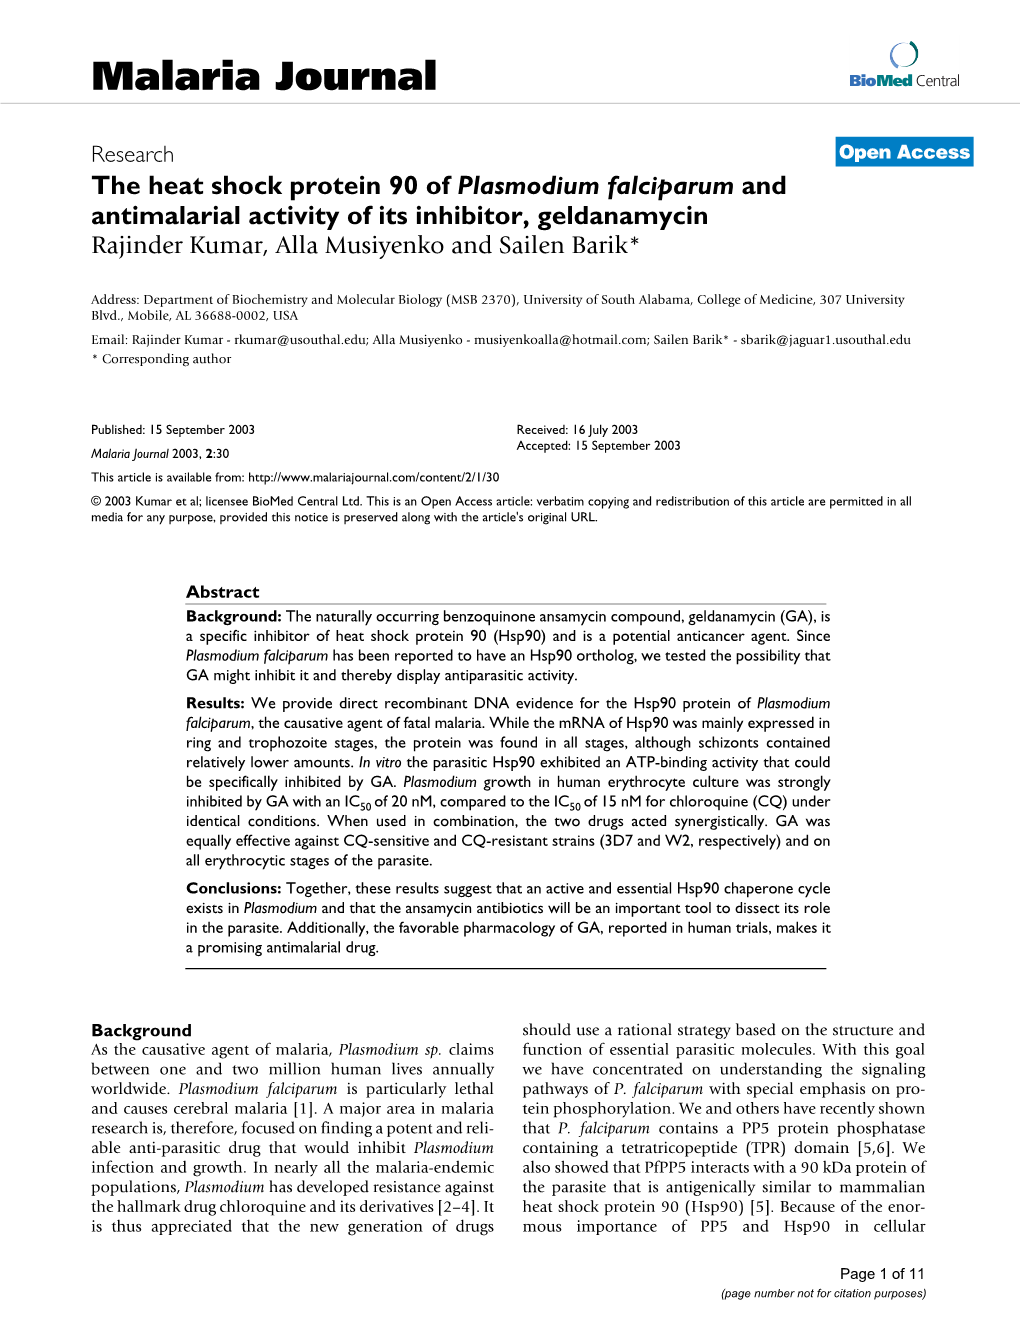 The Heat Shock Protein 90 of Plasmodium Falciparum and Antimalarial Activity of Its Inhibitor, Geldanamycin Rajinder Kumar, Alla Musiyenko and Sailen Barik*